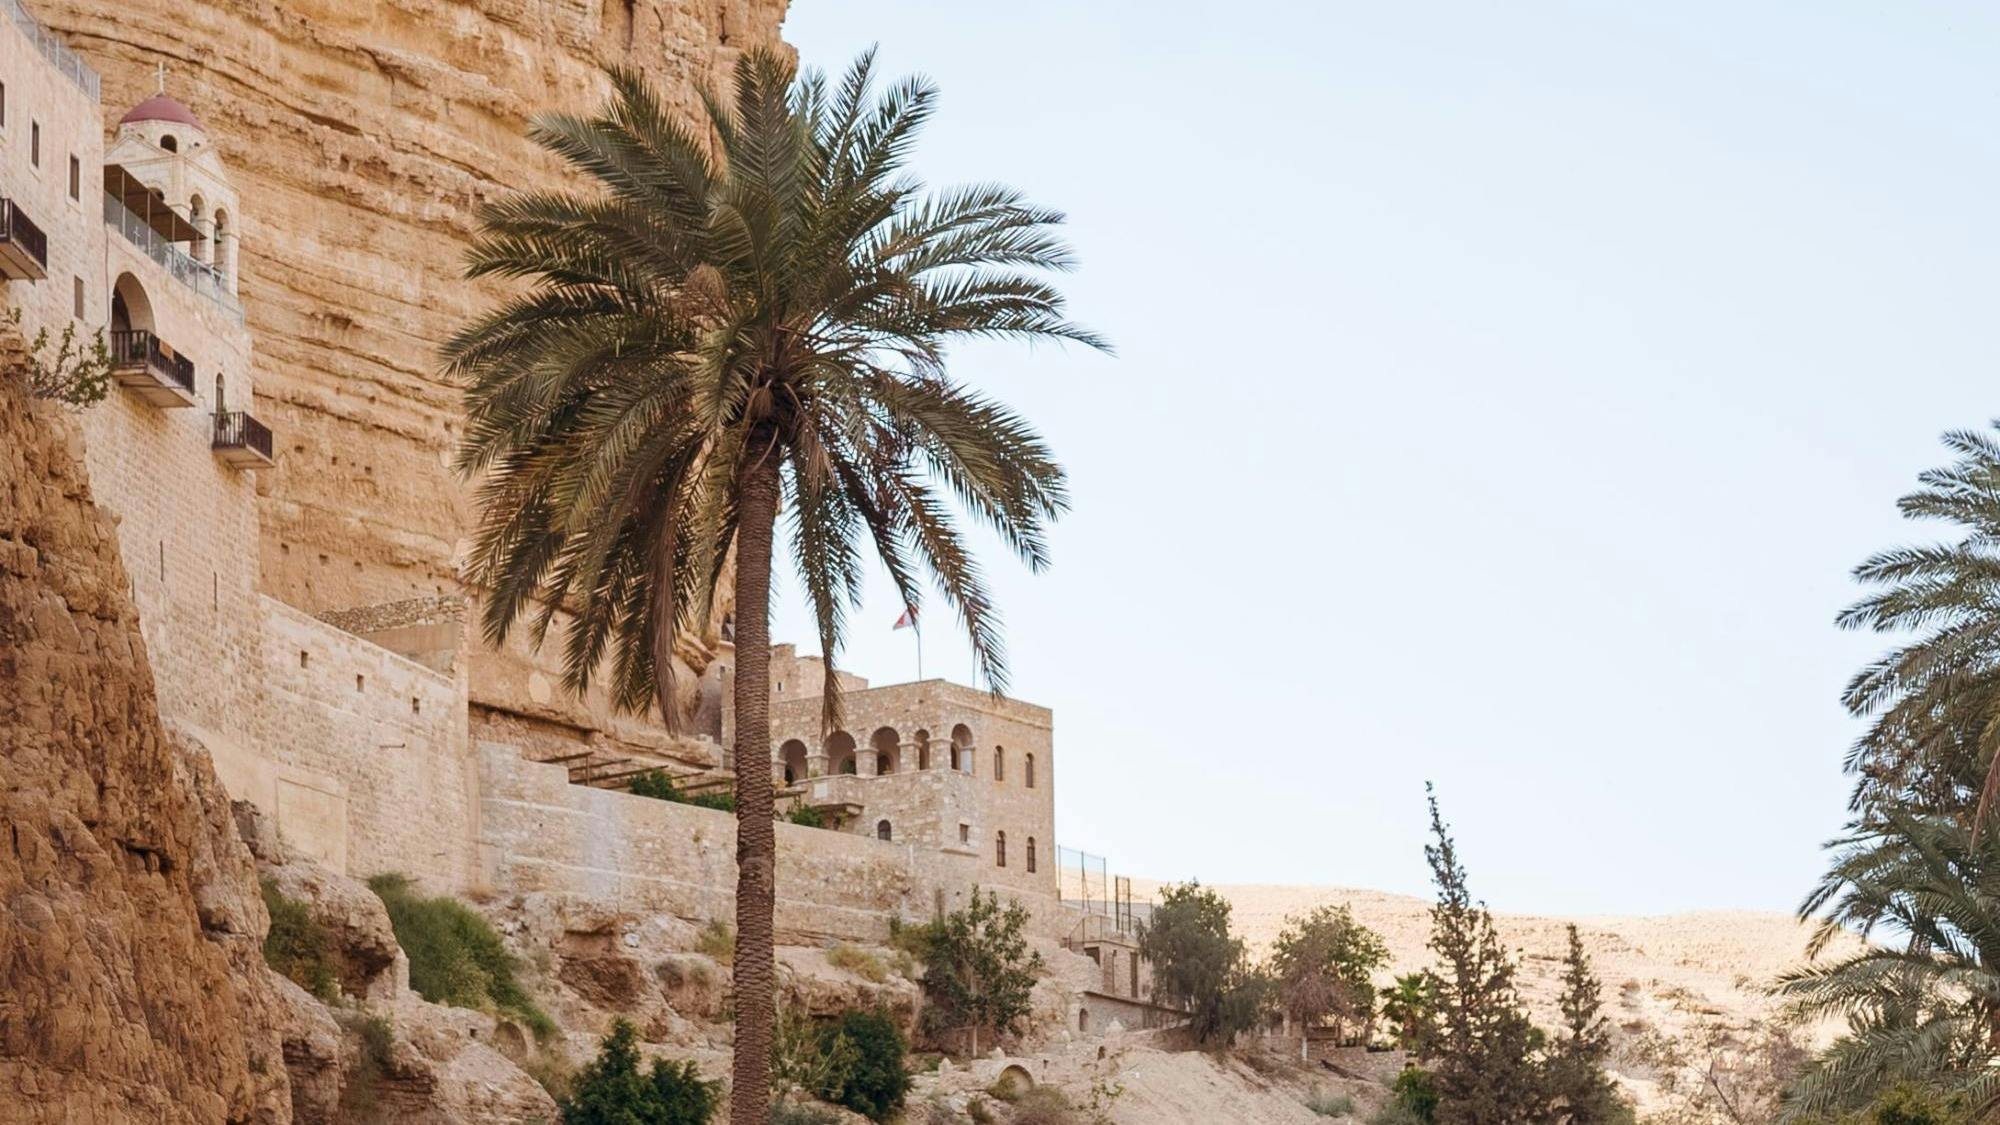 Israel ruins among palm trees and sand